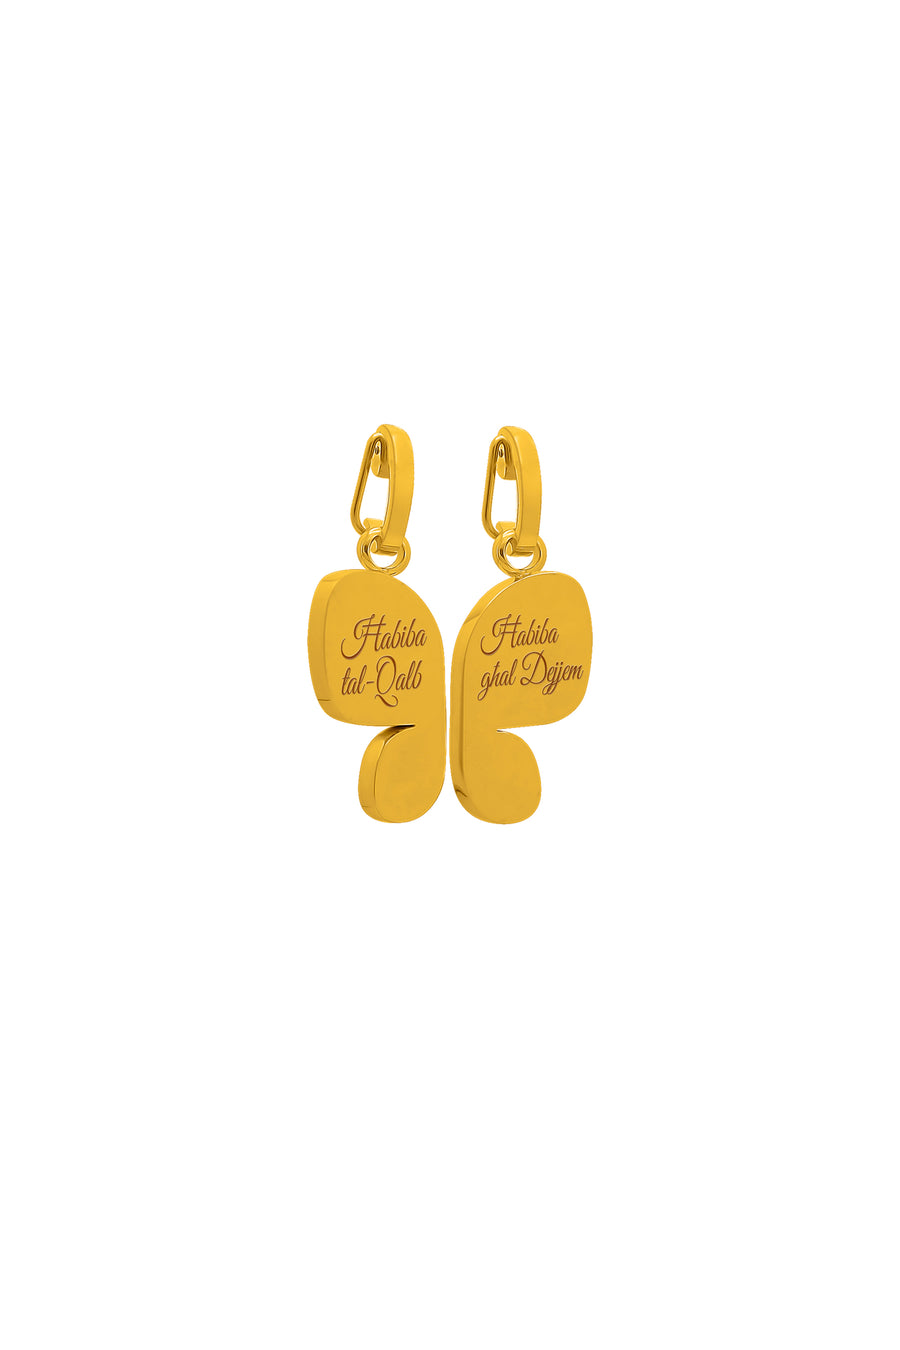 L-Aqwa Ħabiba Butterfly Wings Pendants & Carisma Logo Birthstone Pendant Gift Set